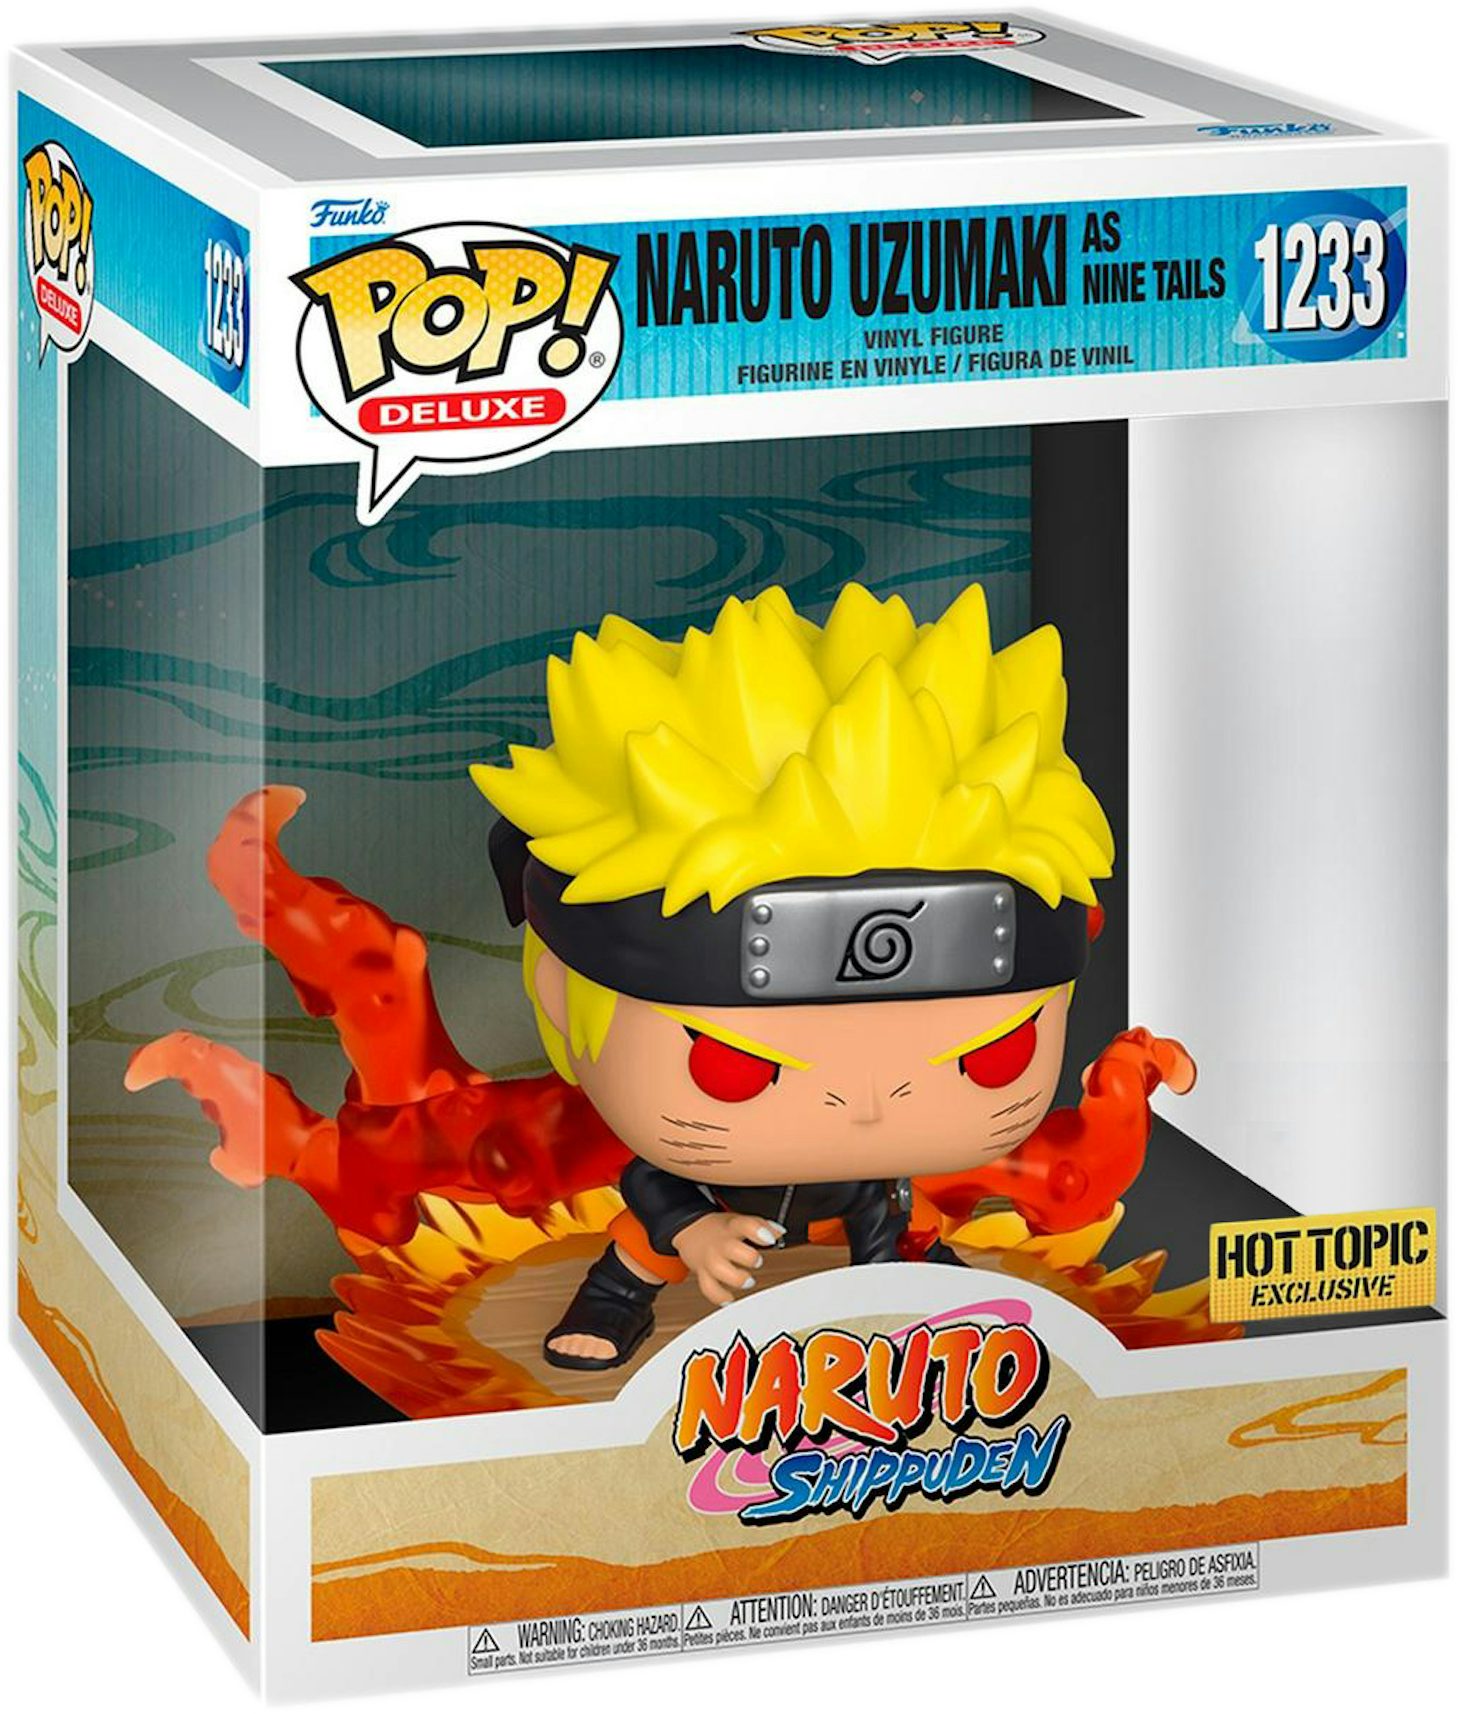 Funko Pop! Deluxe Naruto Shippuden Naruto Uzumaki as Nine Tails Hot Topic  Exclusive Figure #1233 - IT